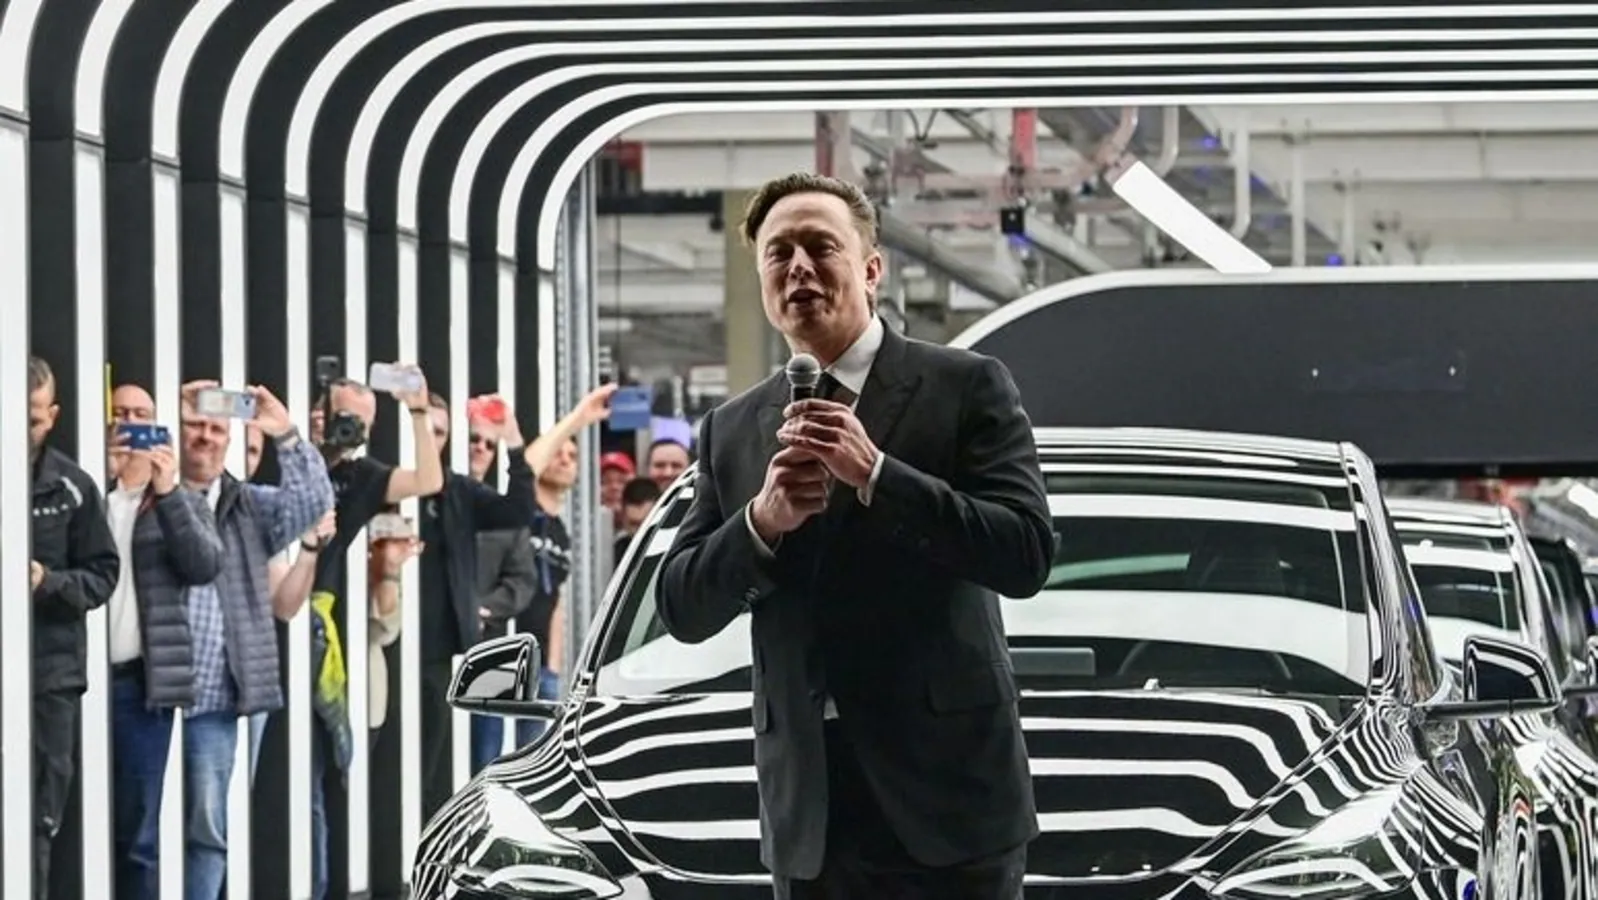 Judge rules Elon Musk’s tweets over taking Tesla private were false, investors say